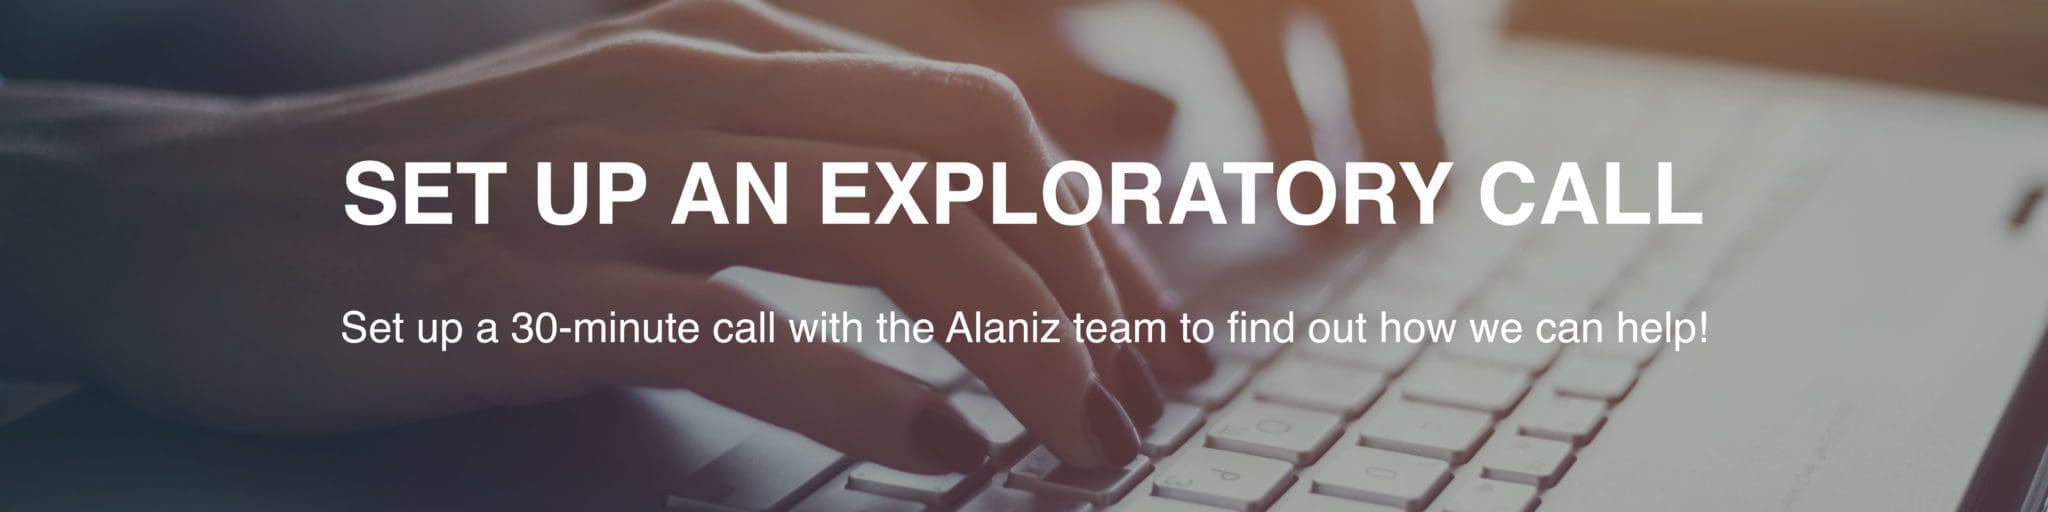 exploratory call alaniz